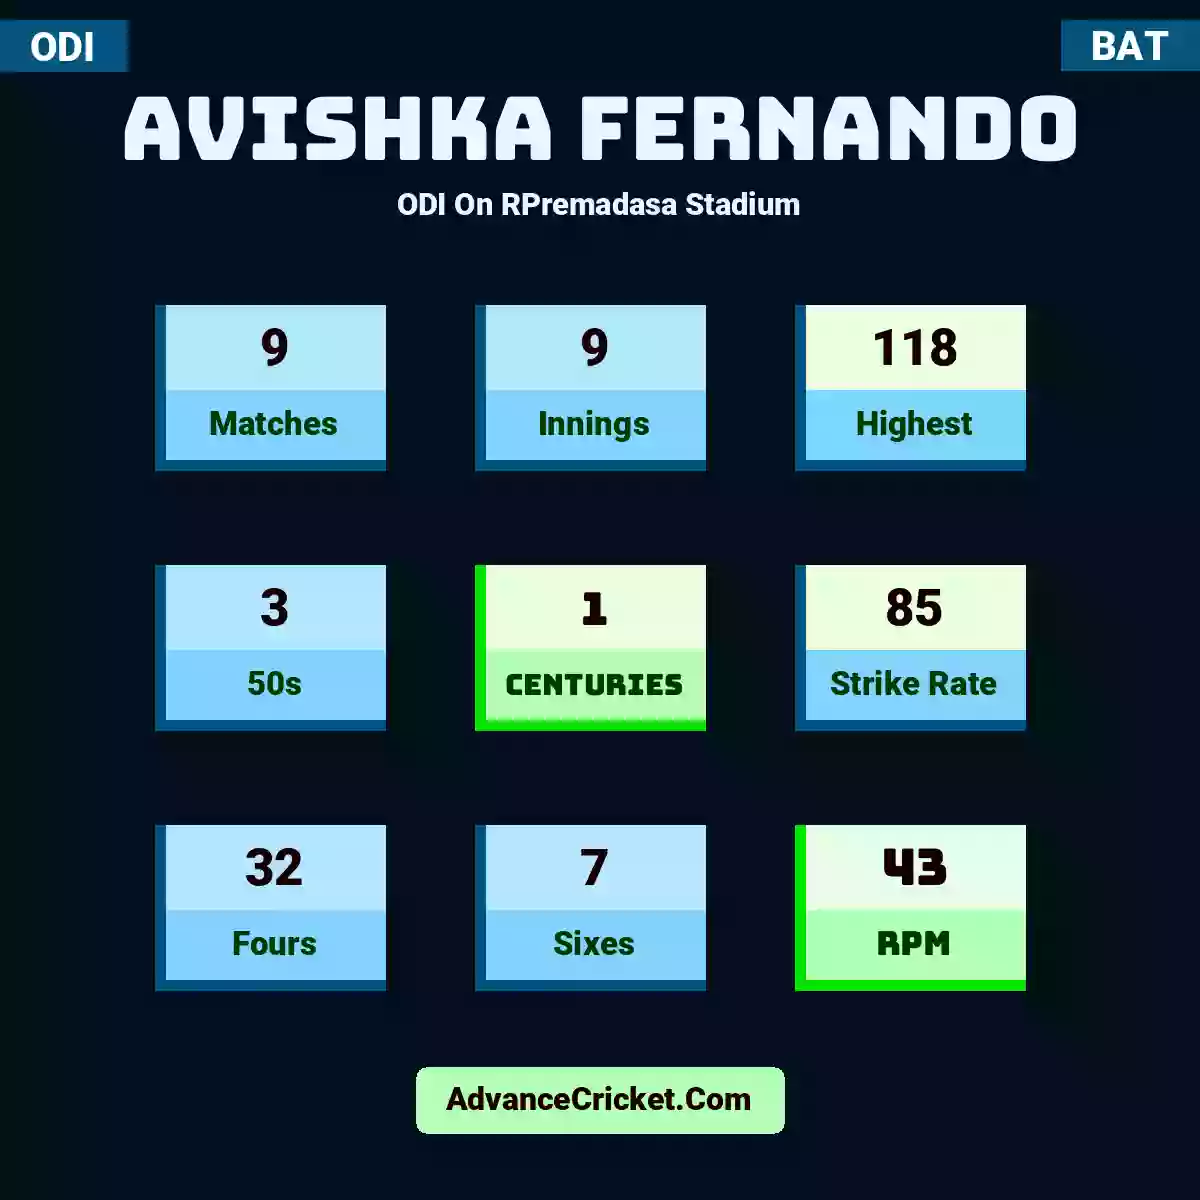 Avishka Fernando ODI  On RPremadasa Stadium, Avishka Fernando played 9 matches, scored 118 runs as highest, 3 half-centuries, and 1 centuries, with a strike rate of 85. A.Fernando hit 32 fours and 7 sixes, with an RPM of 43.